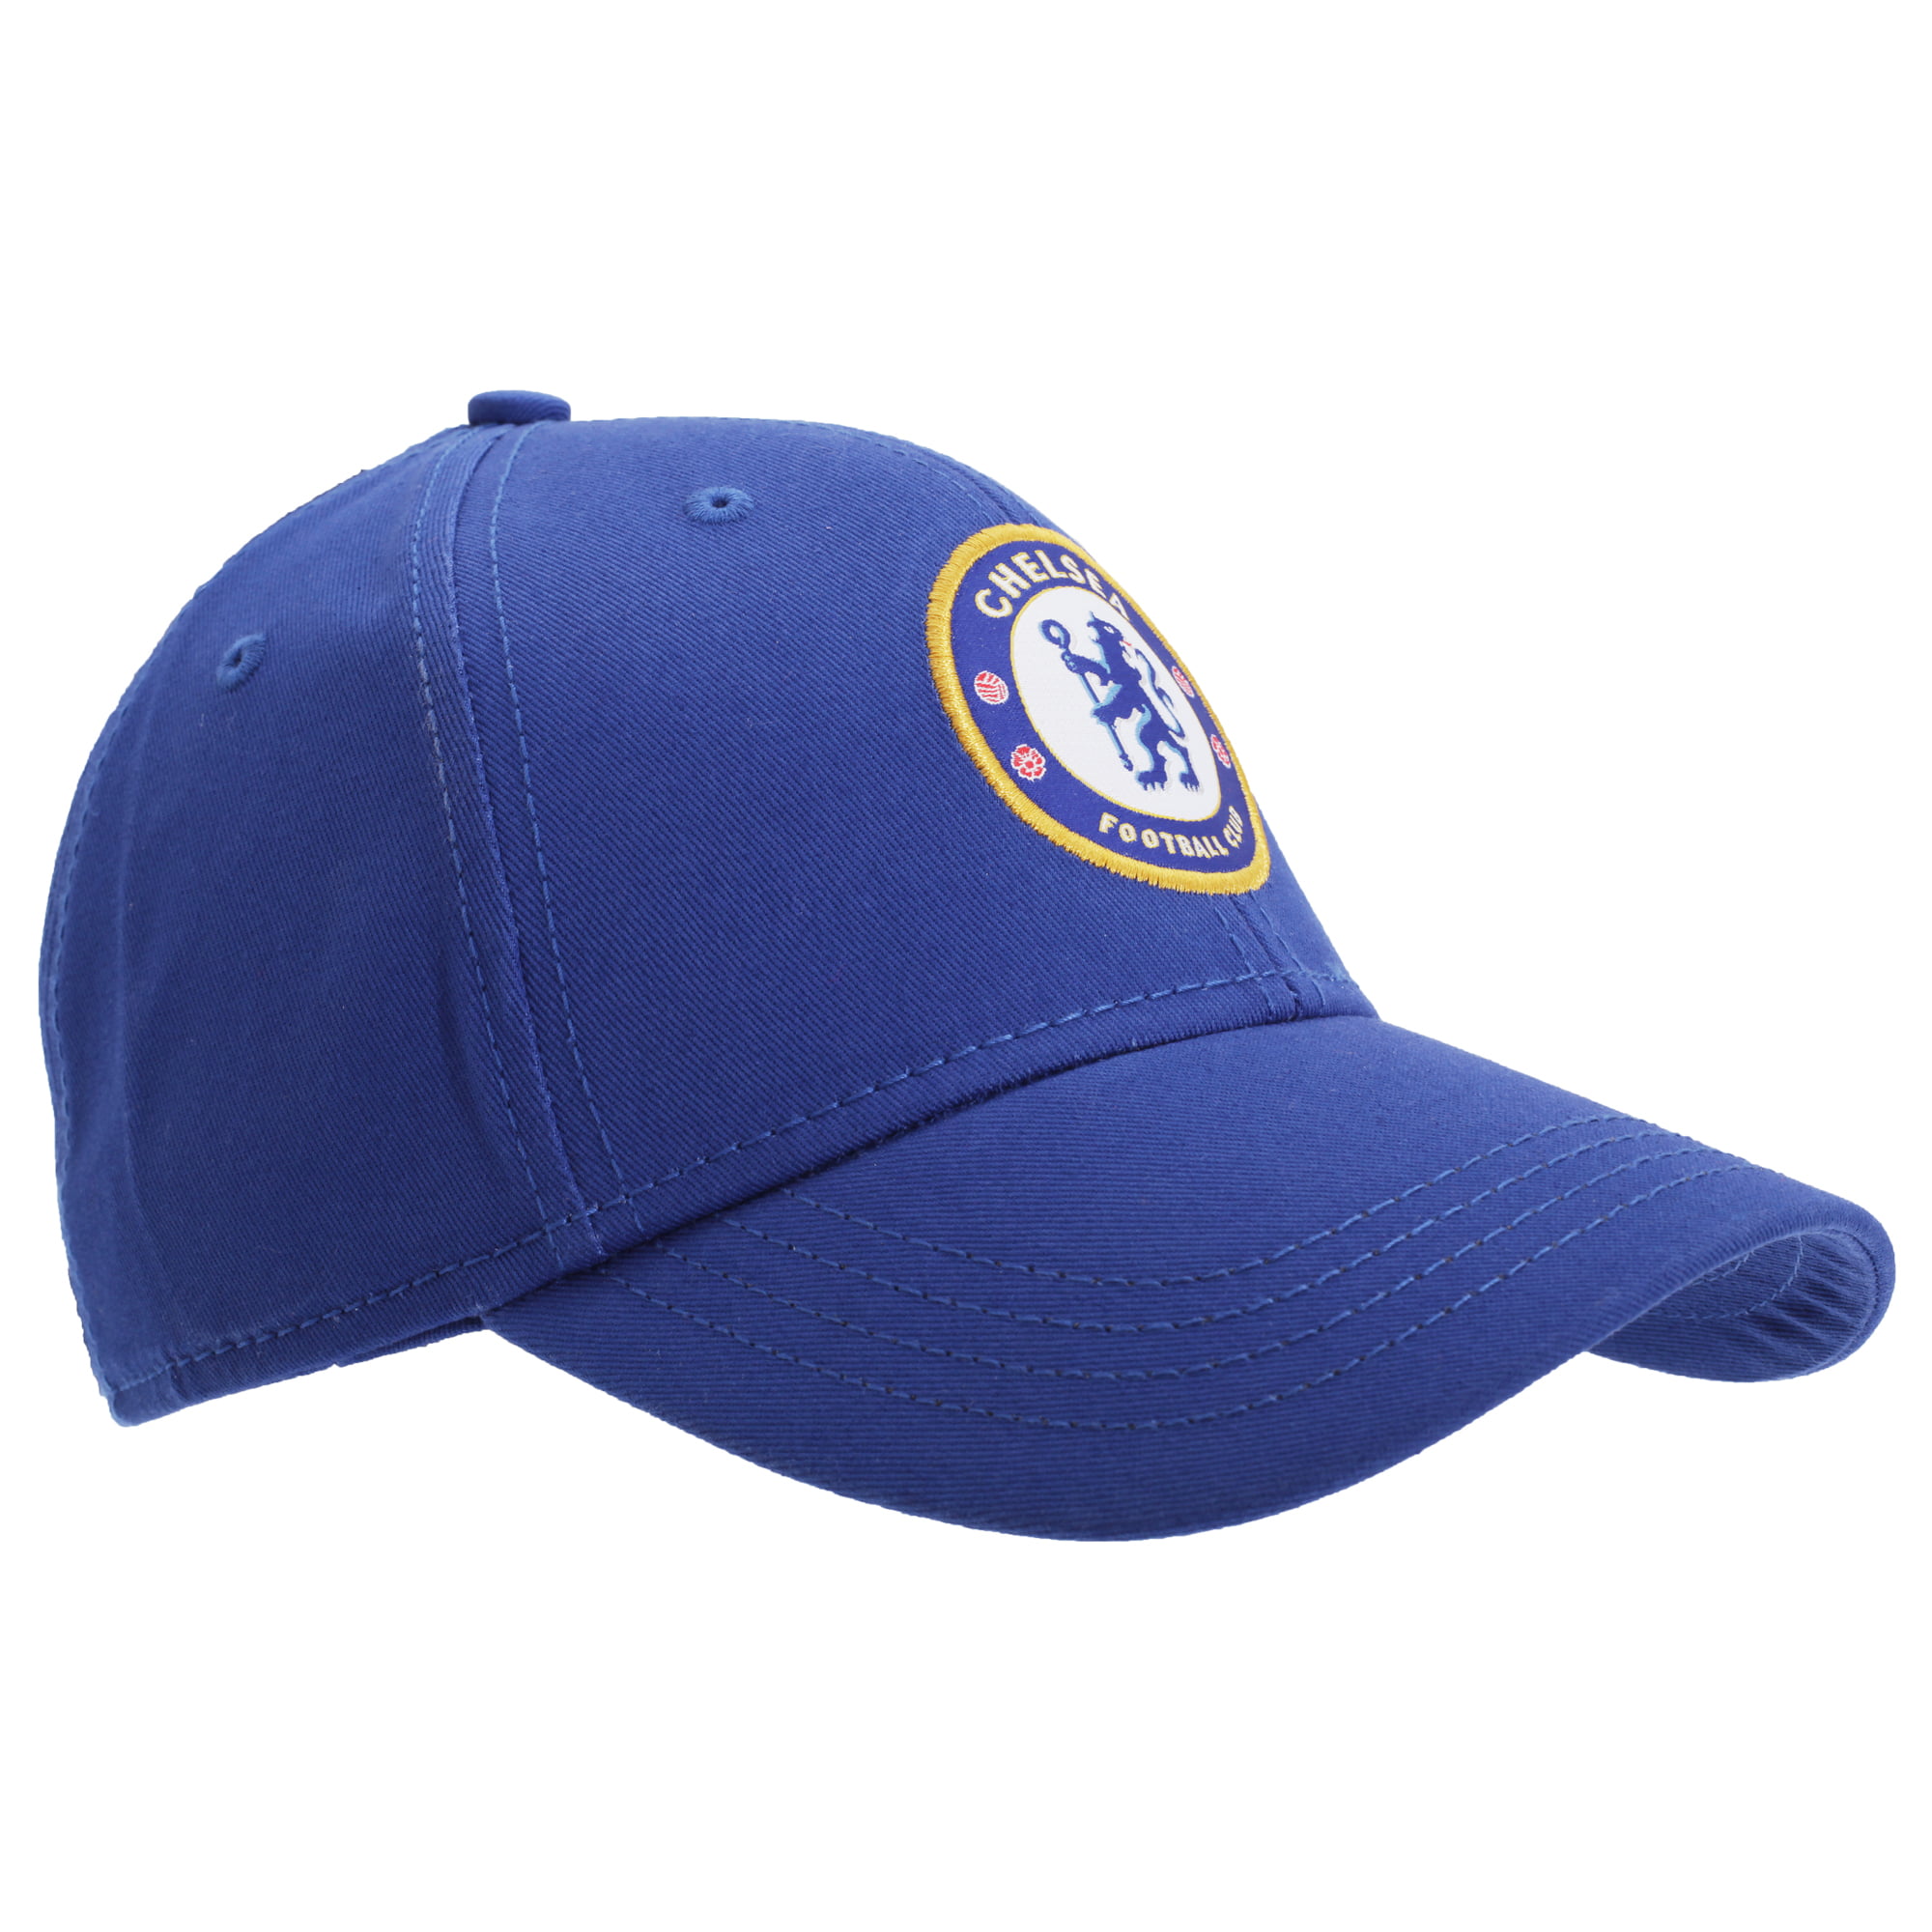 Chelsea FC Official Football Crest Baseball Cap | Walmart Canada